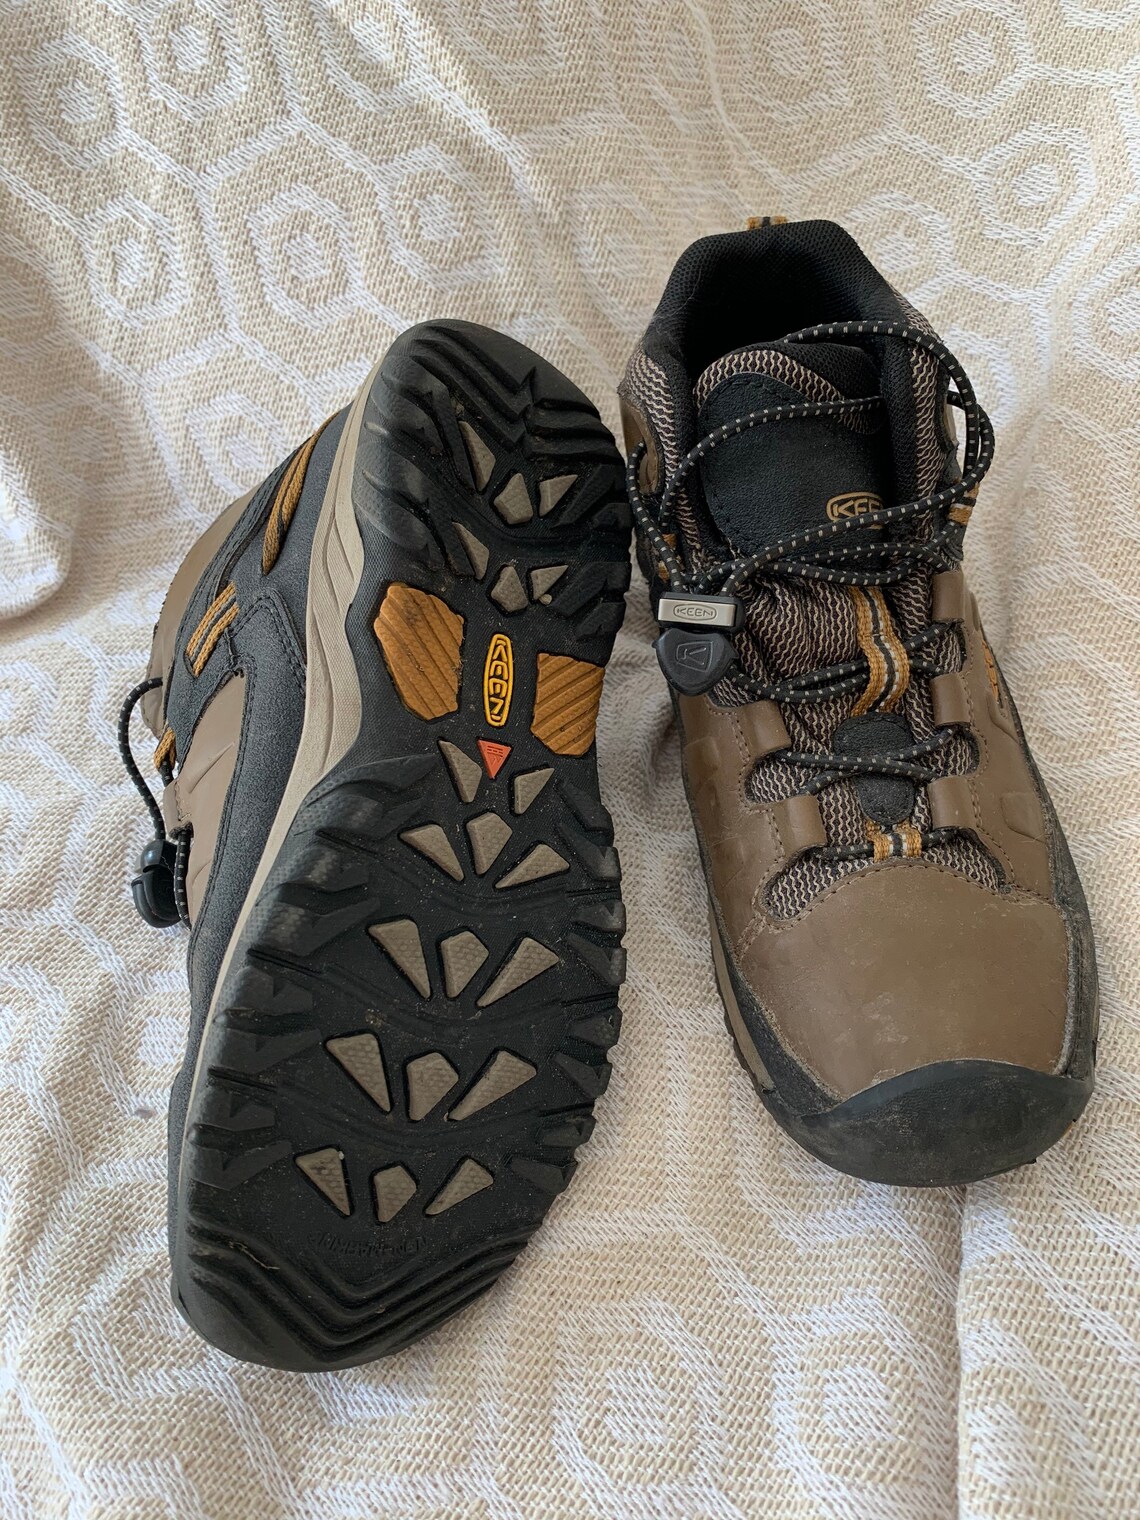 Kids waterproof Keen Dry hiking boot size 3 | Etsy